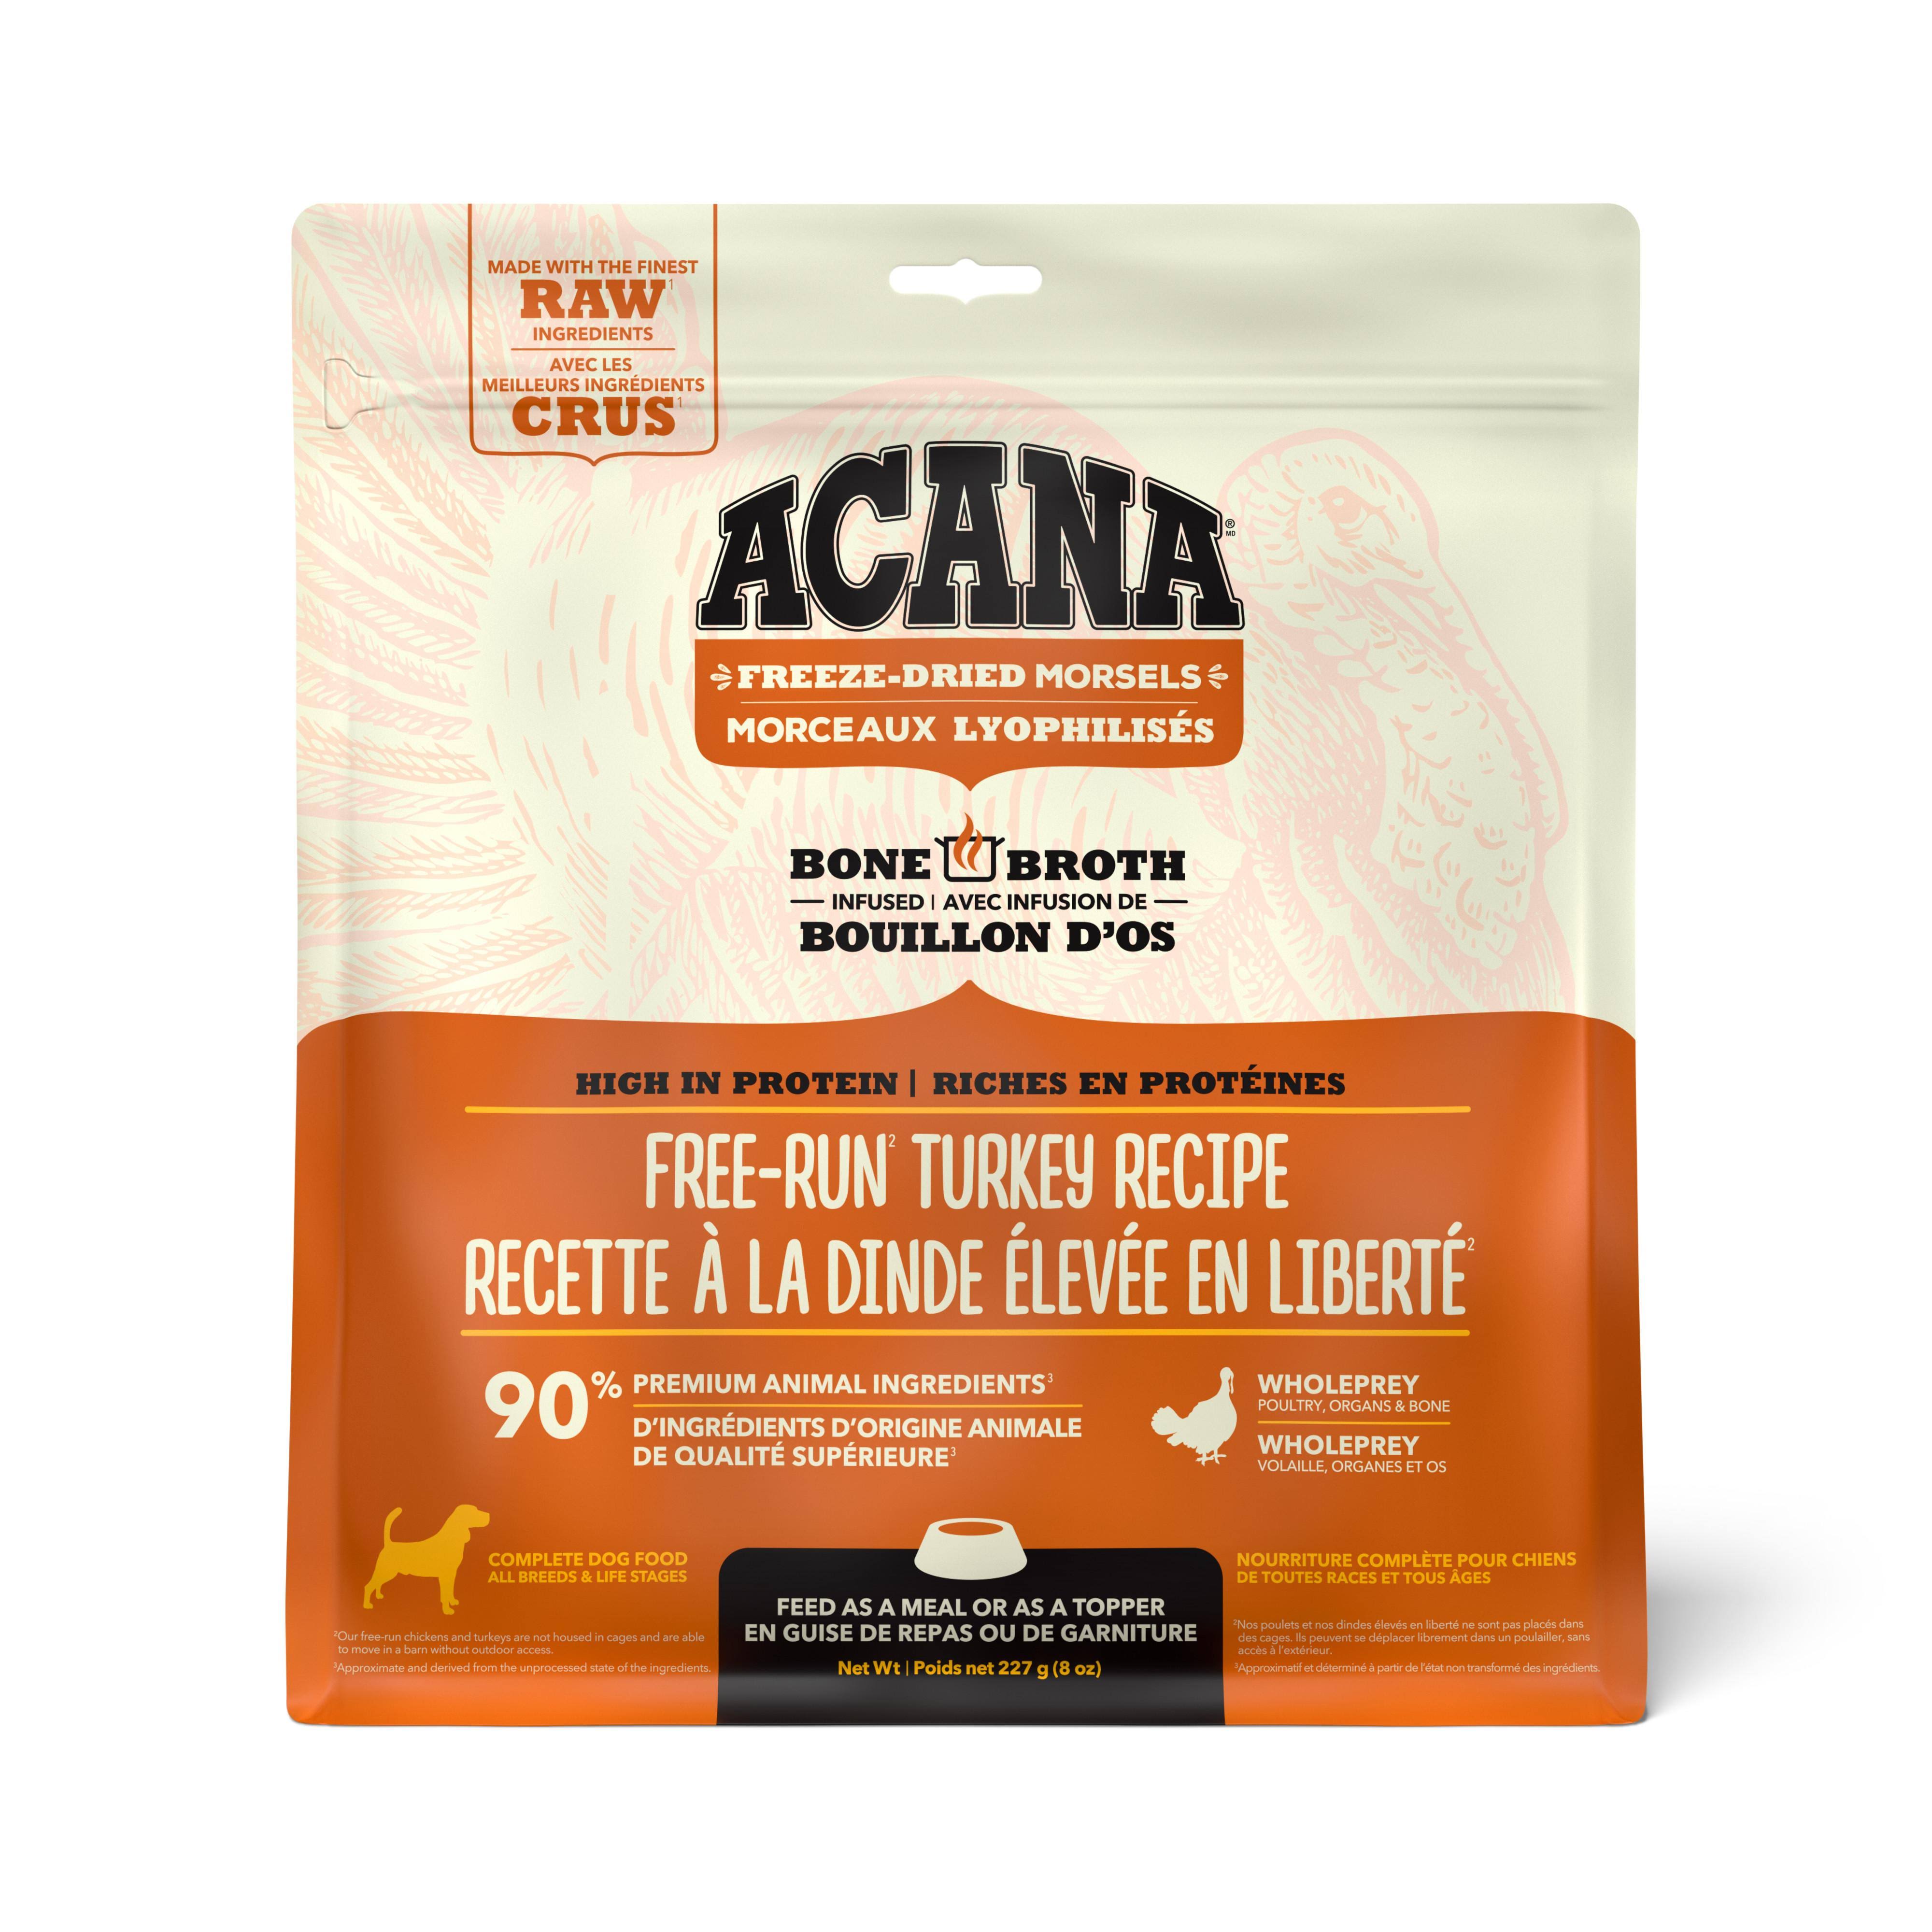 Acana Freeze-Dried Dog Food - Free-Run Turkey Recipe 8oz Morsels